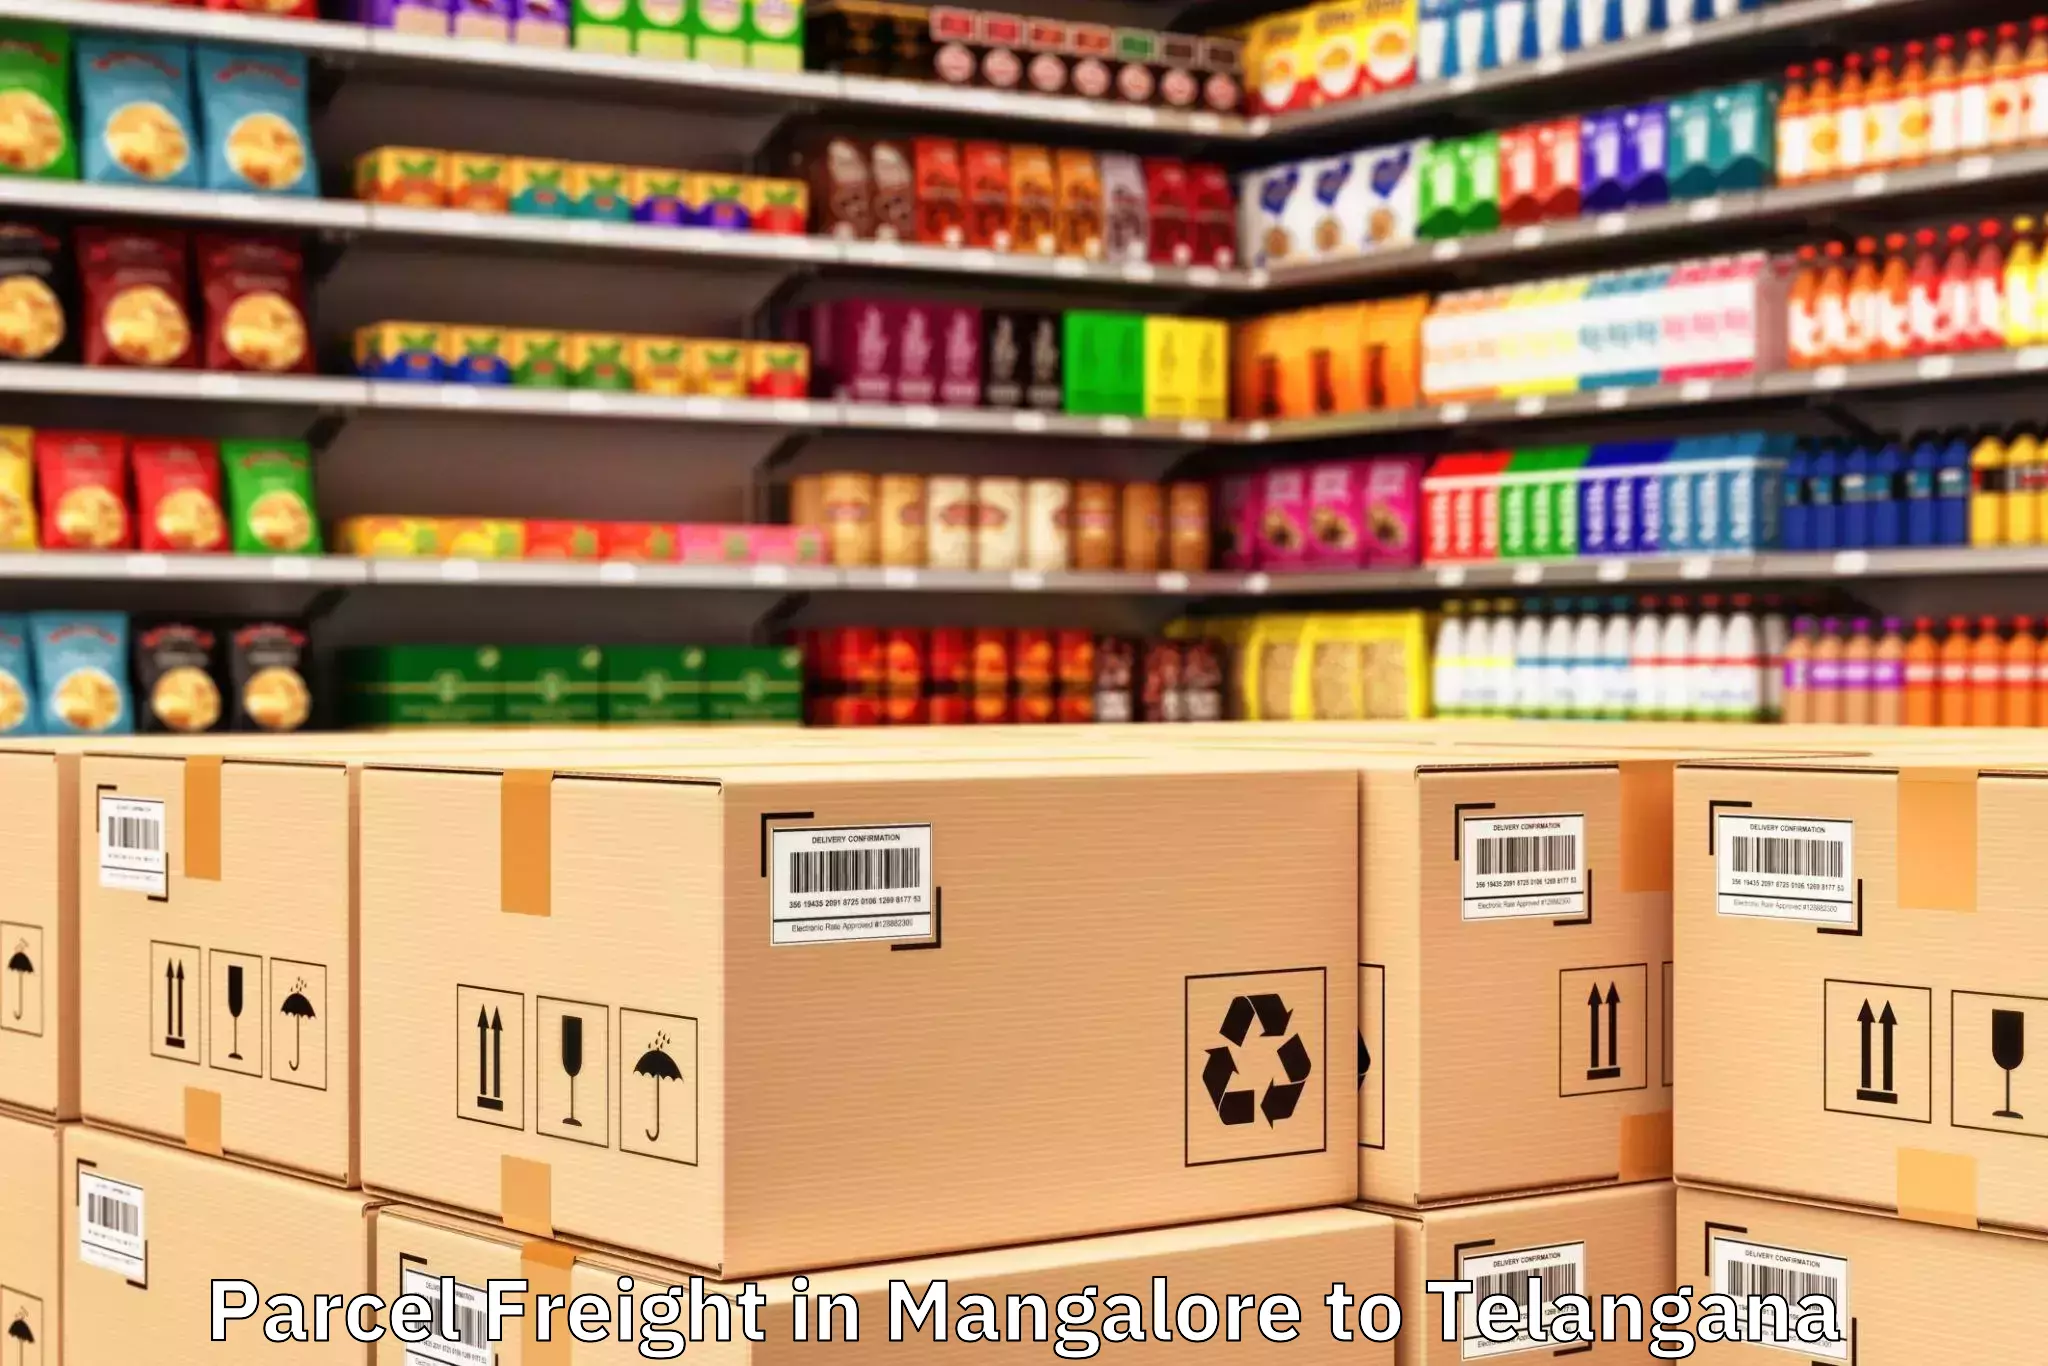 Get Mangalore to Mirdoddi Parcel Freight